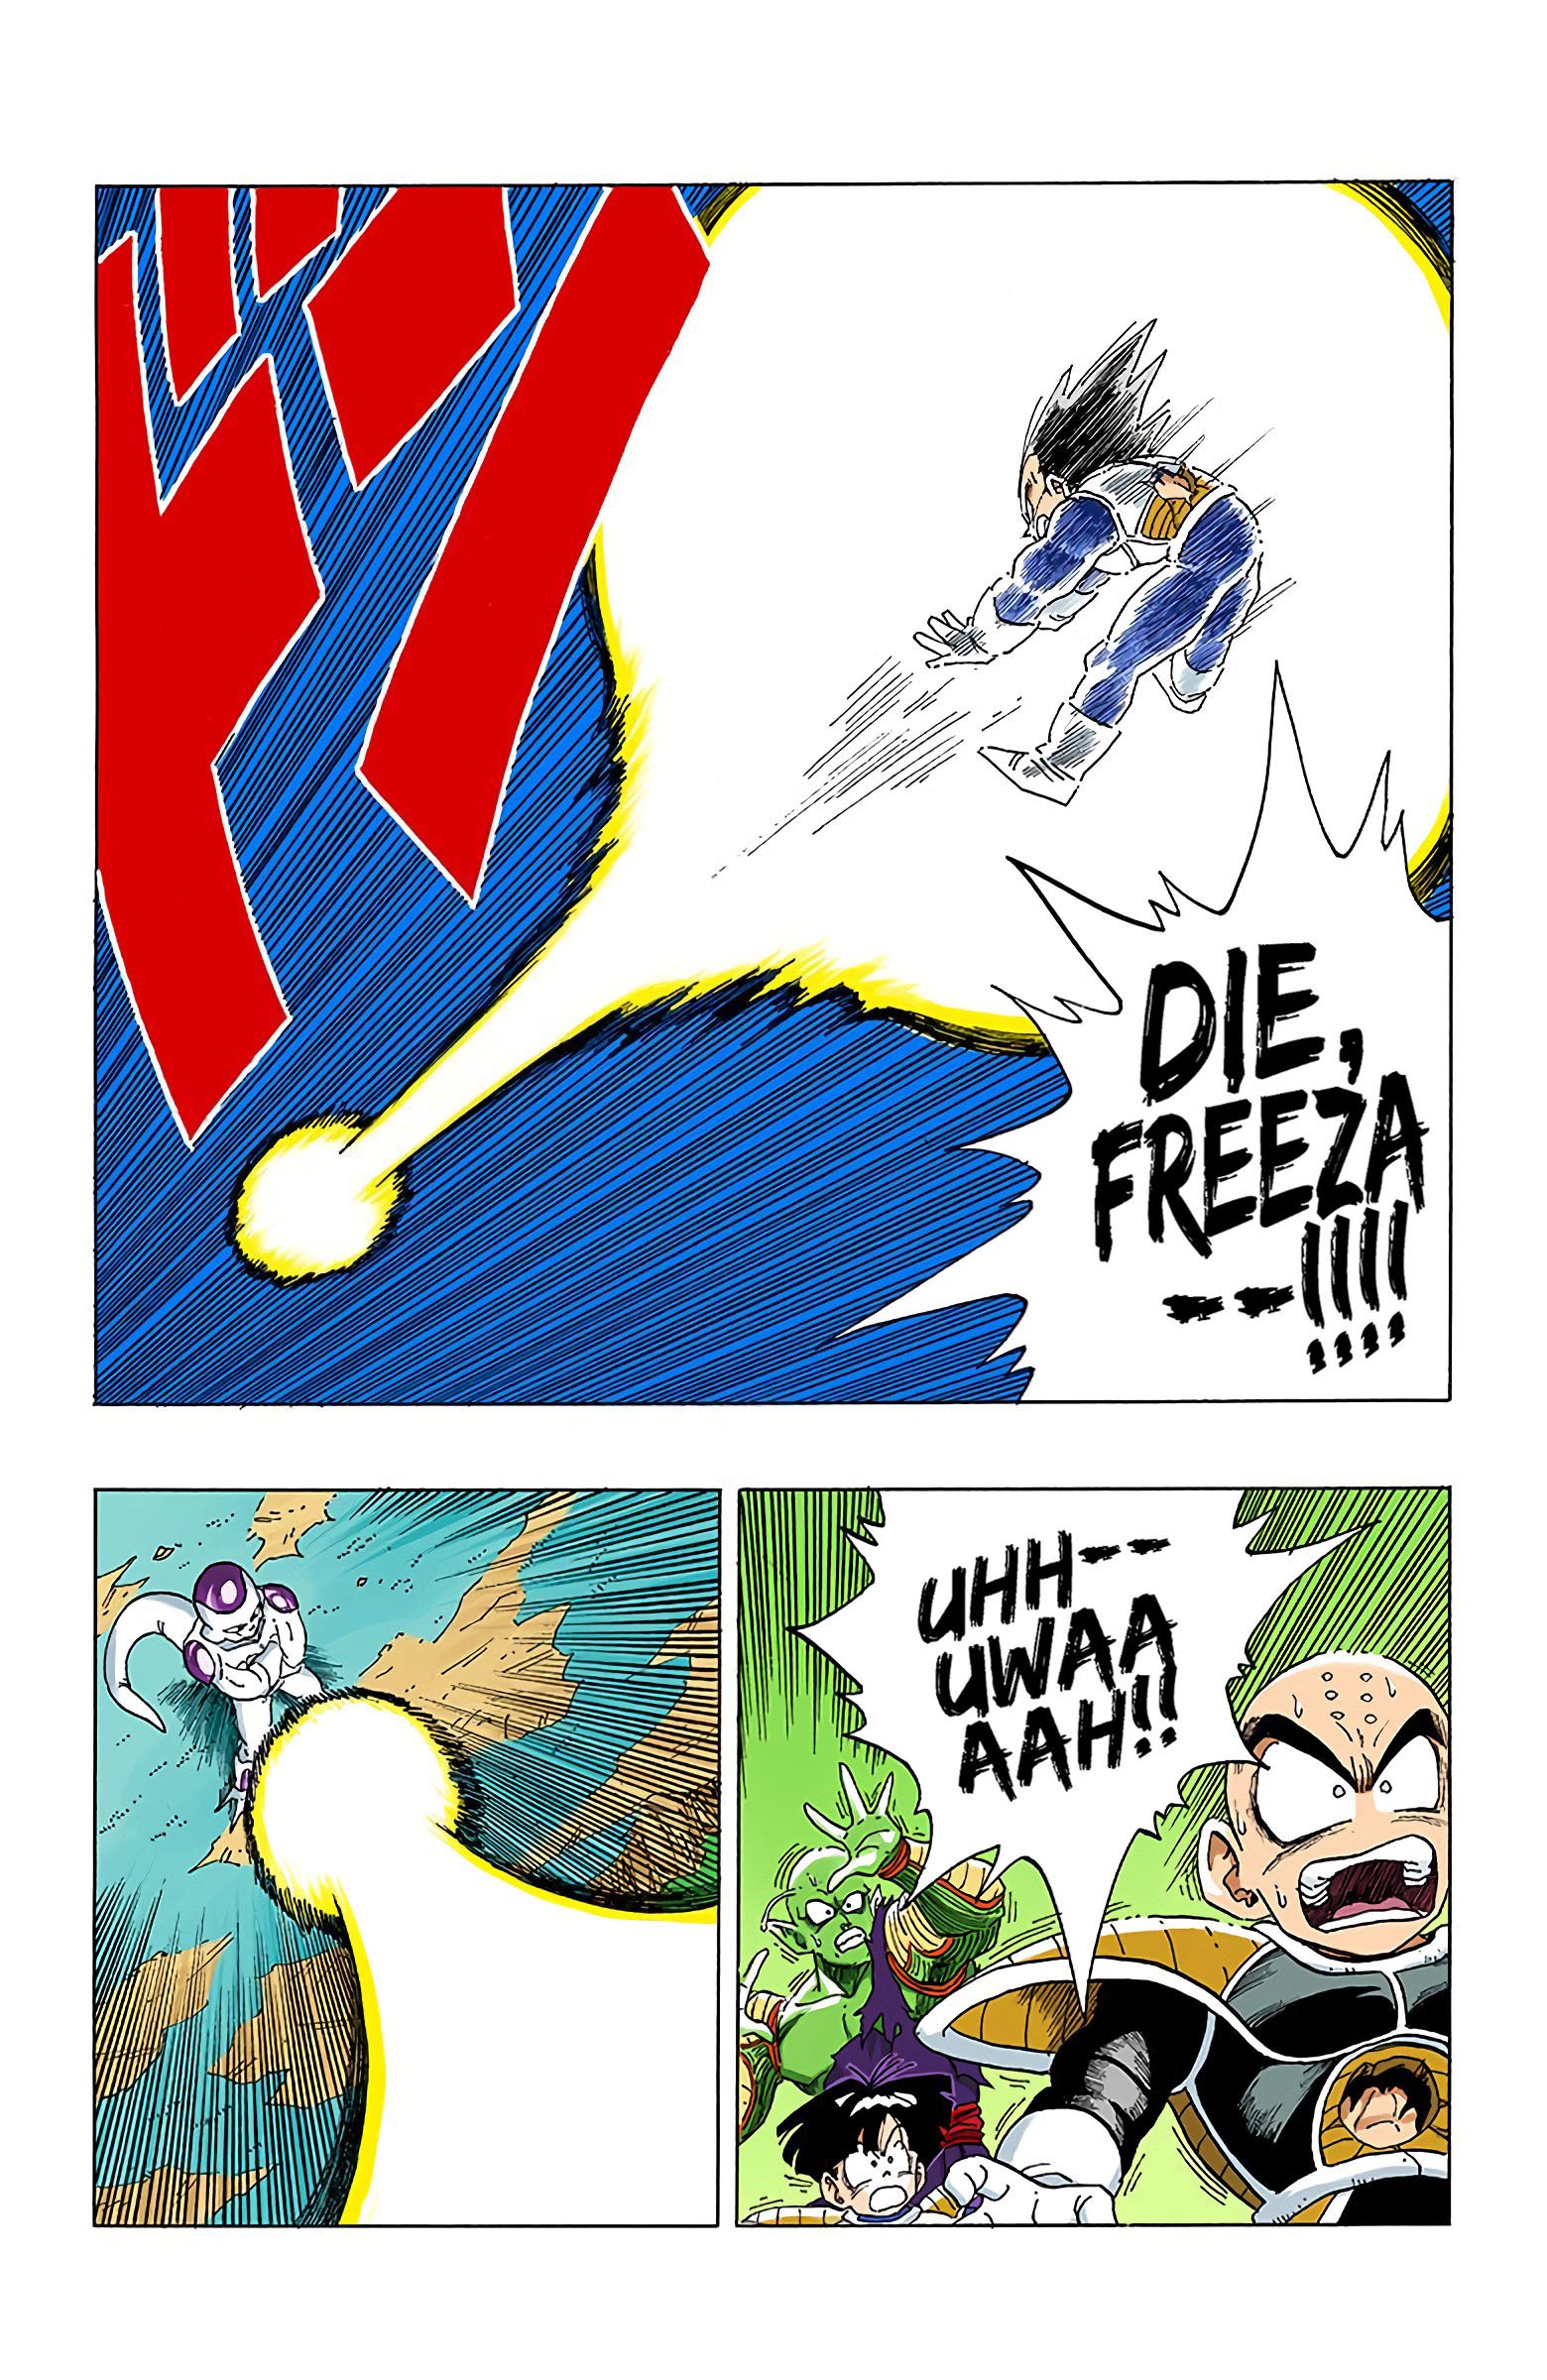 DBZ Frieza Saga (Fan Colored)